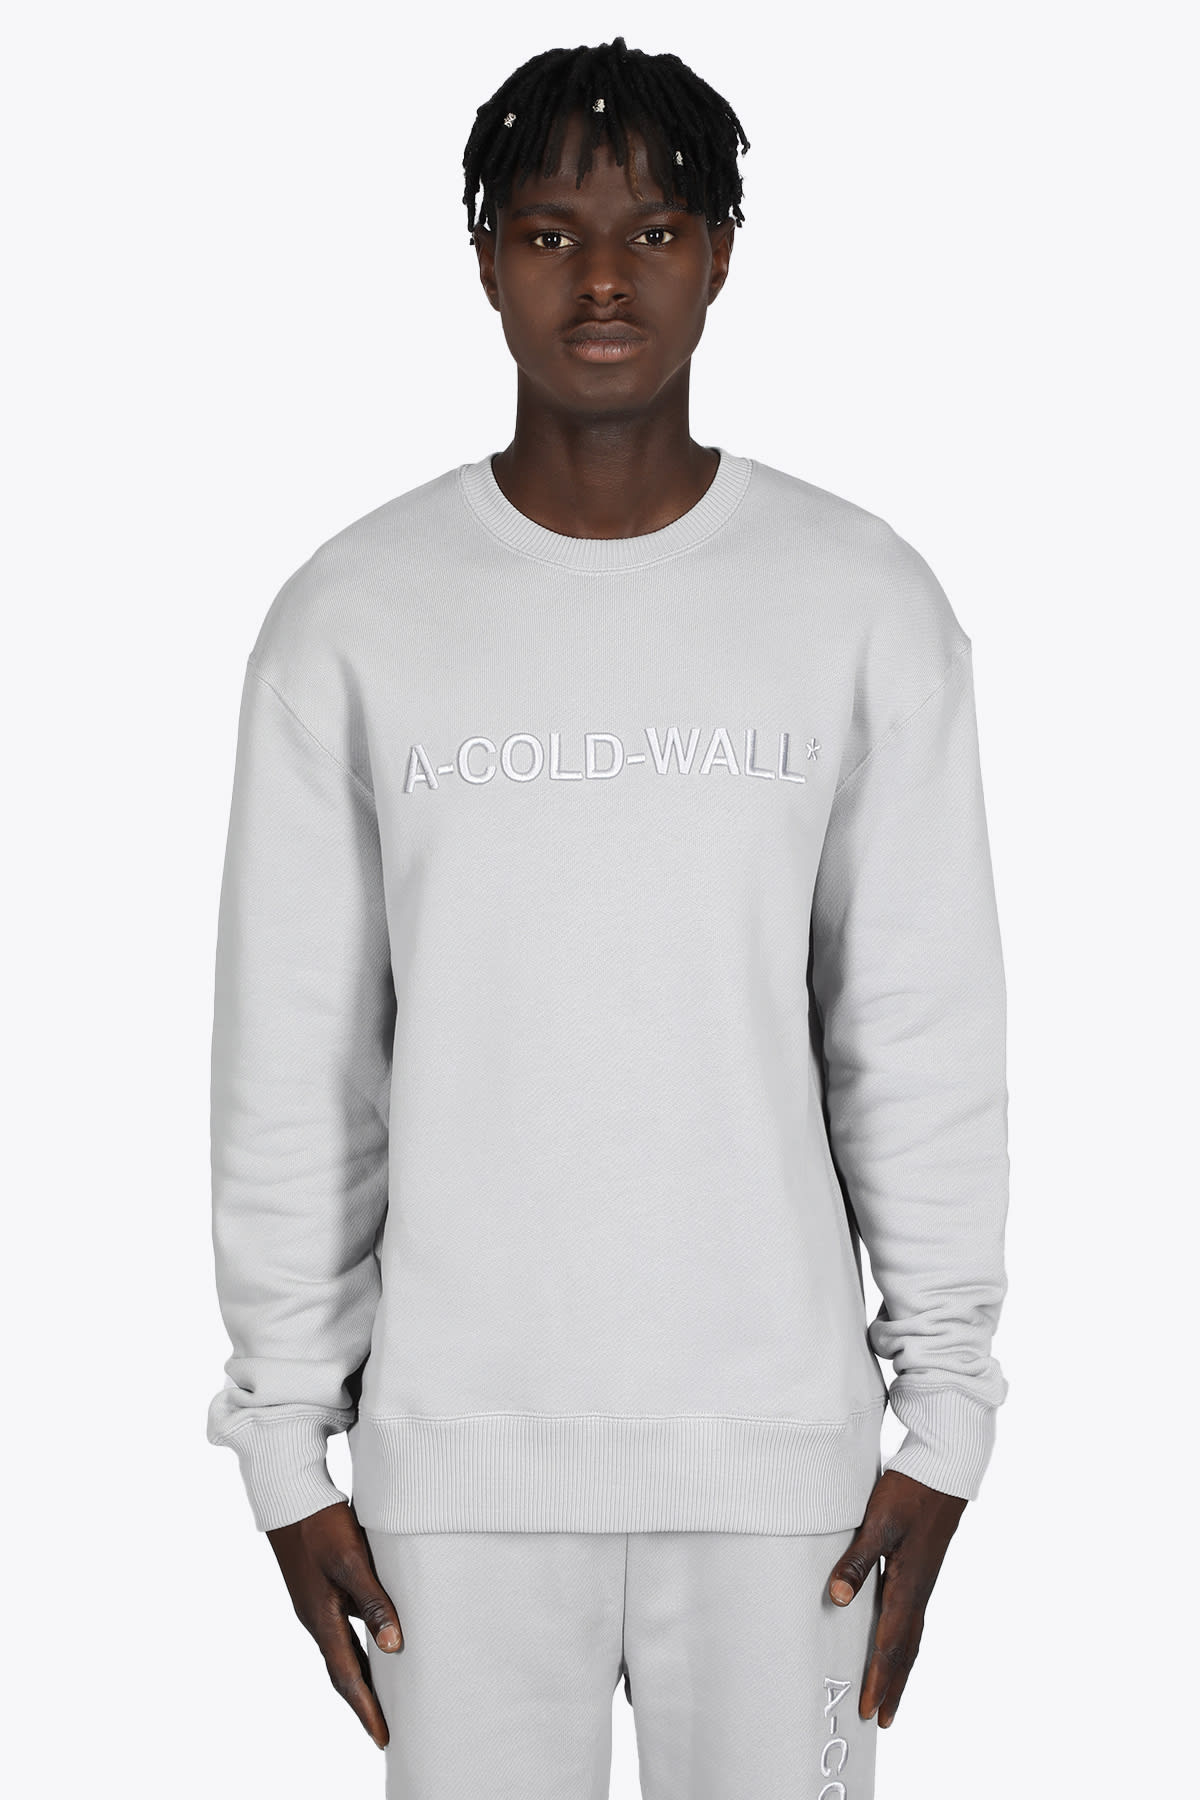 A-COLD-WALL Logo Sweatshirt Grey cotton sweatshirt with embroidered logo